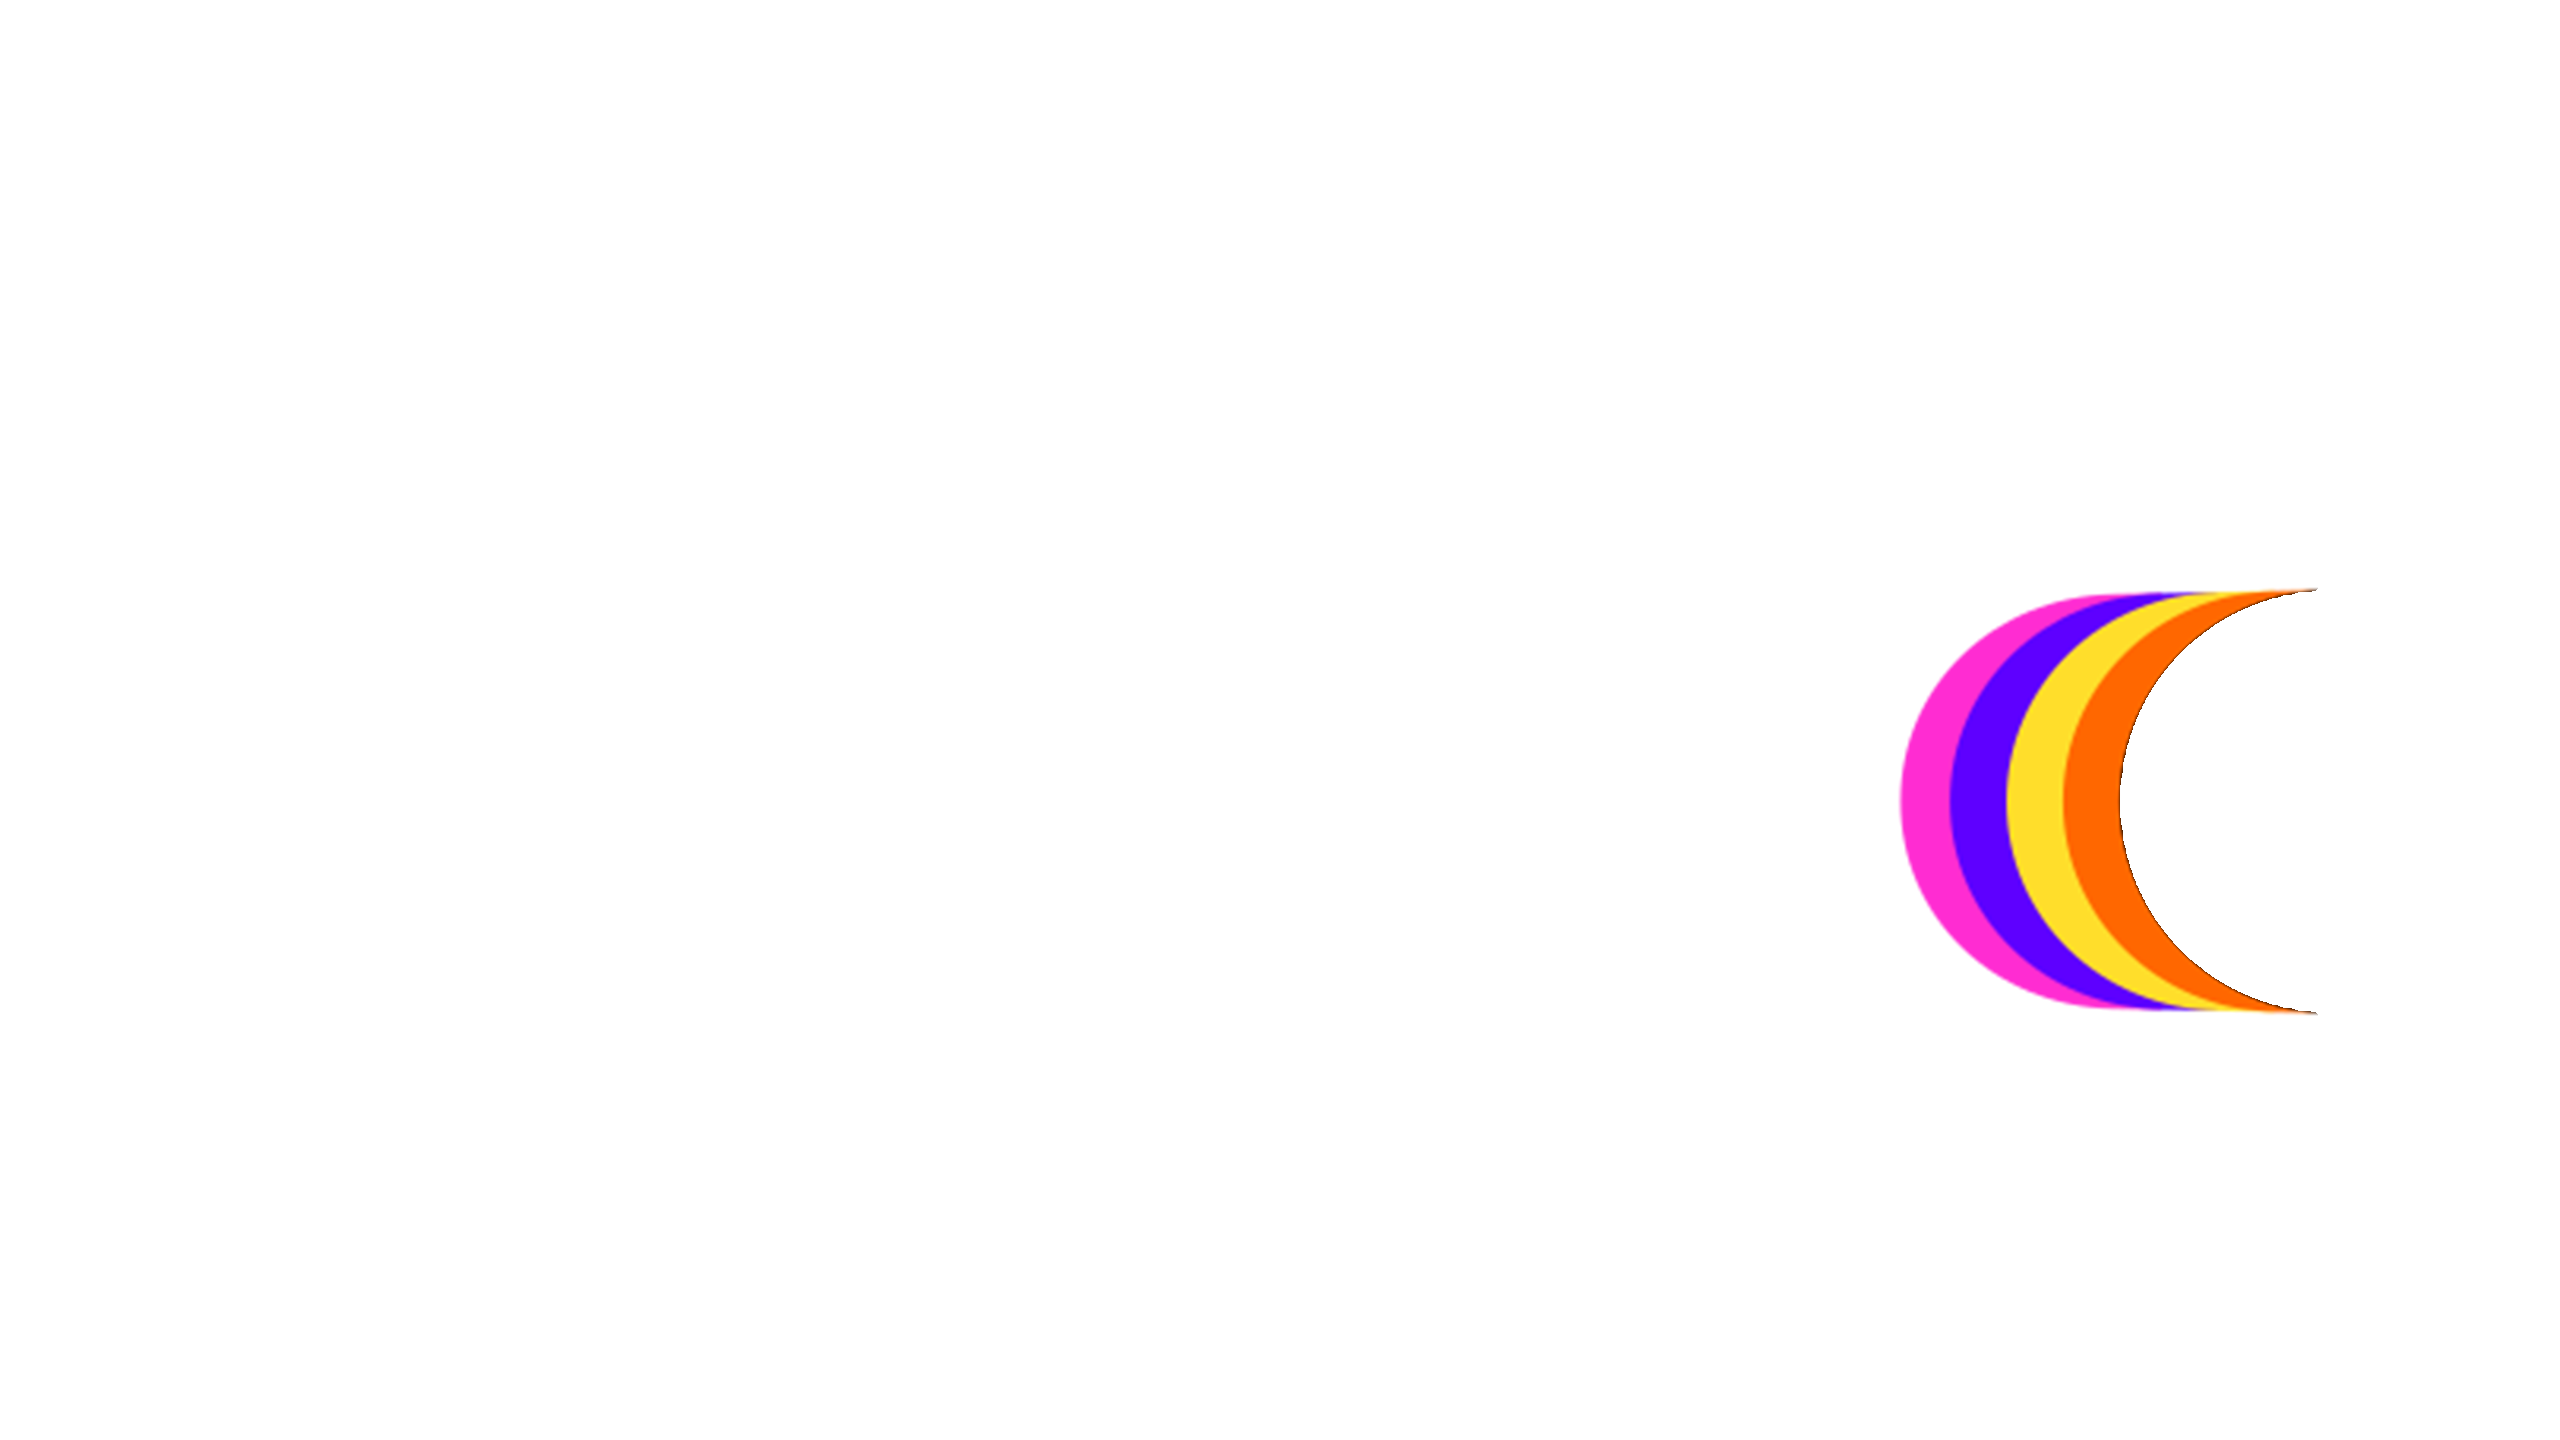 pluto logo